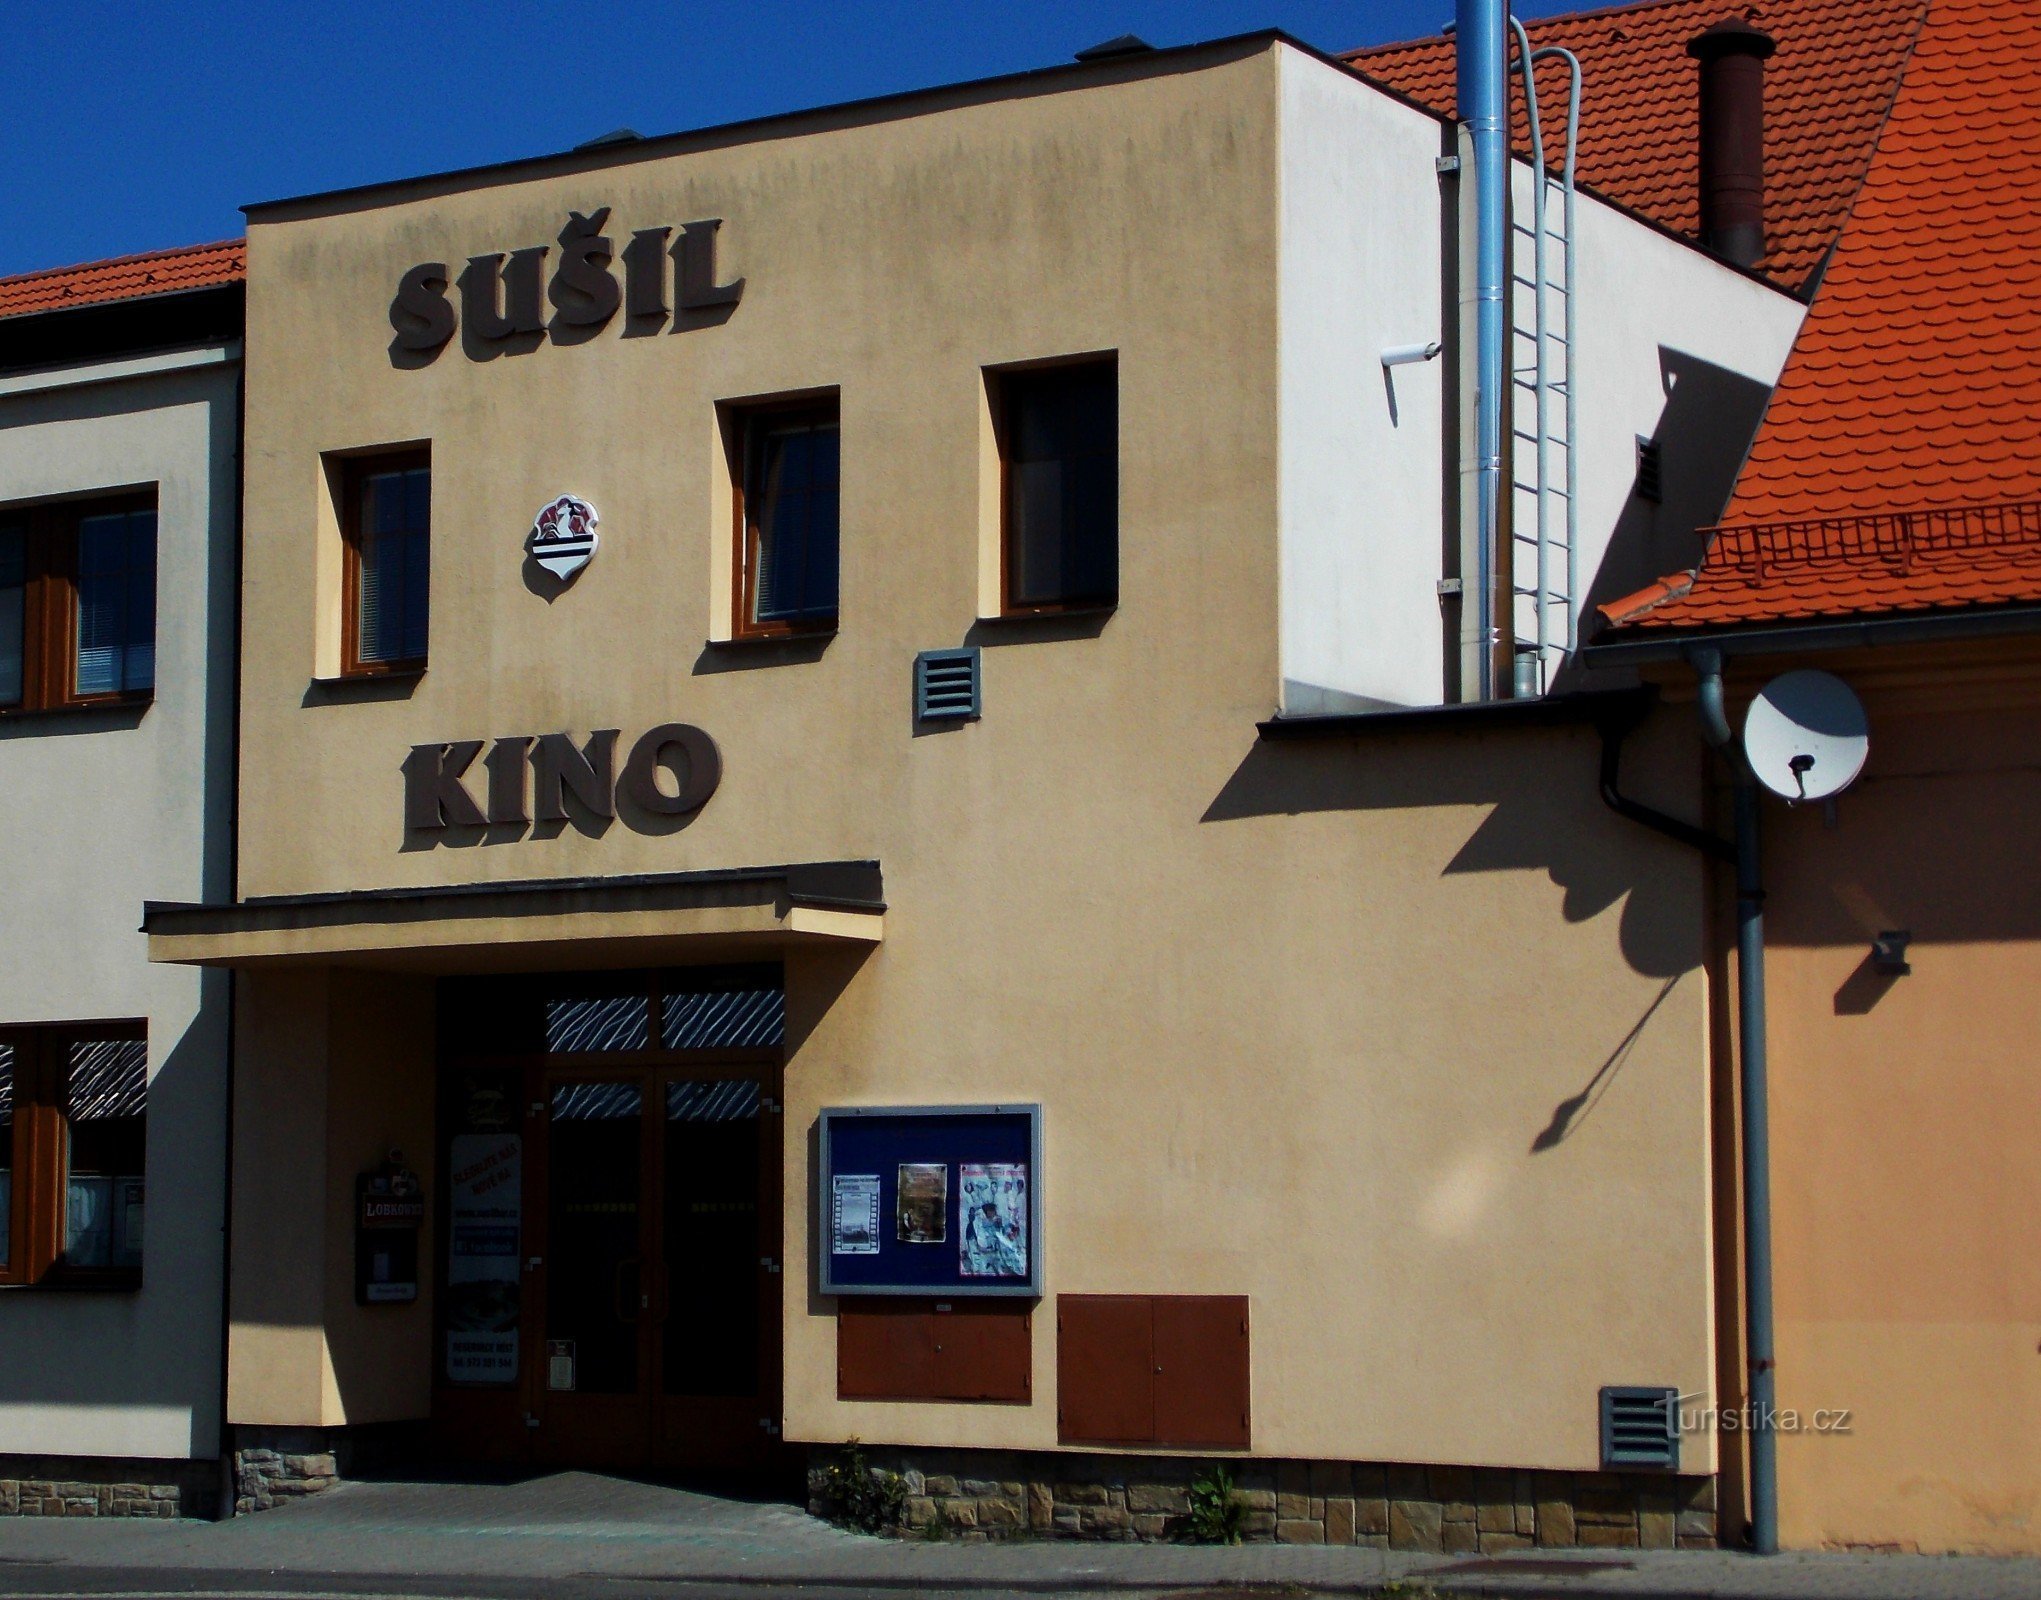 Nhà cộng đồng Sušil ở Bystřice pod Hostýnem